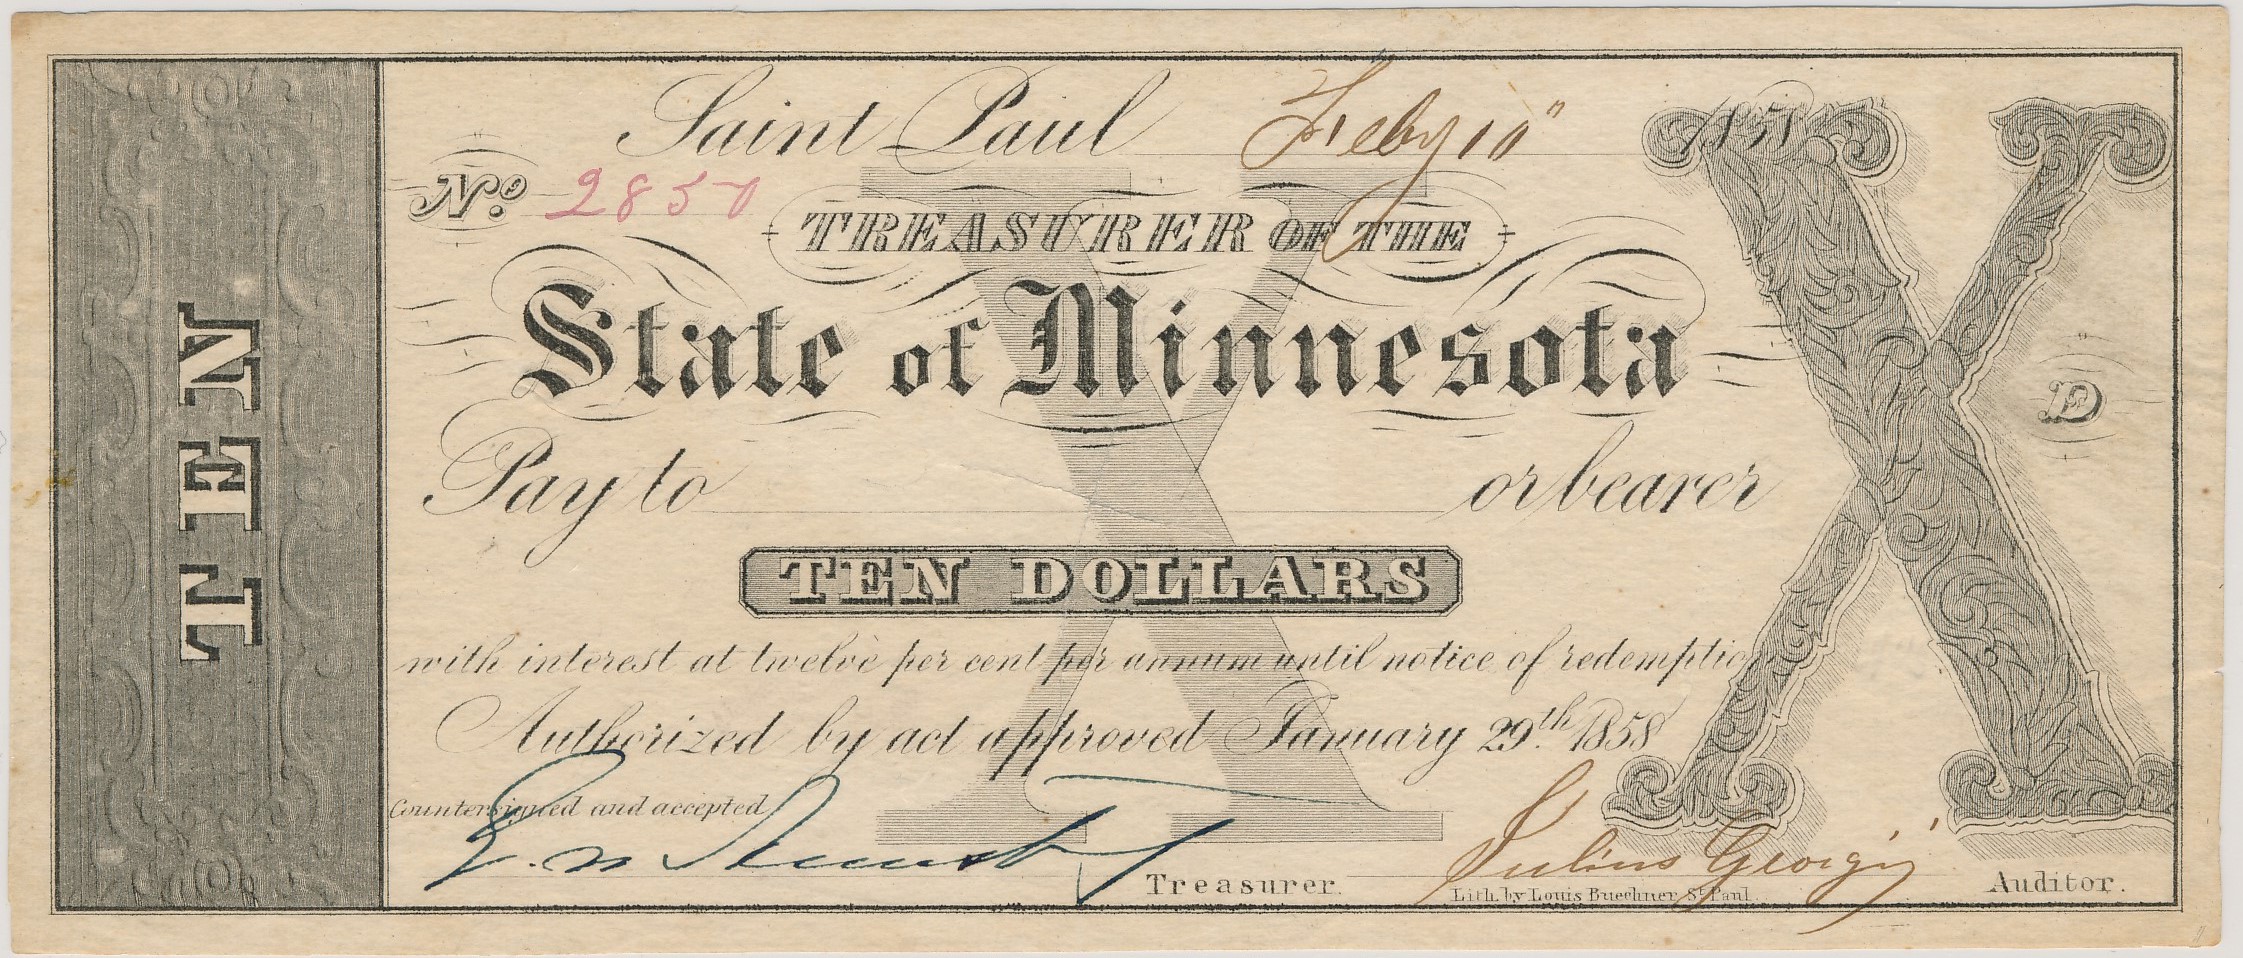 $10 Treasurer of the State of Minnesota